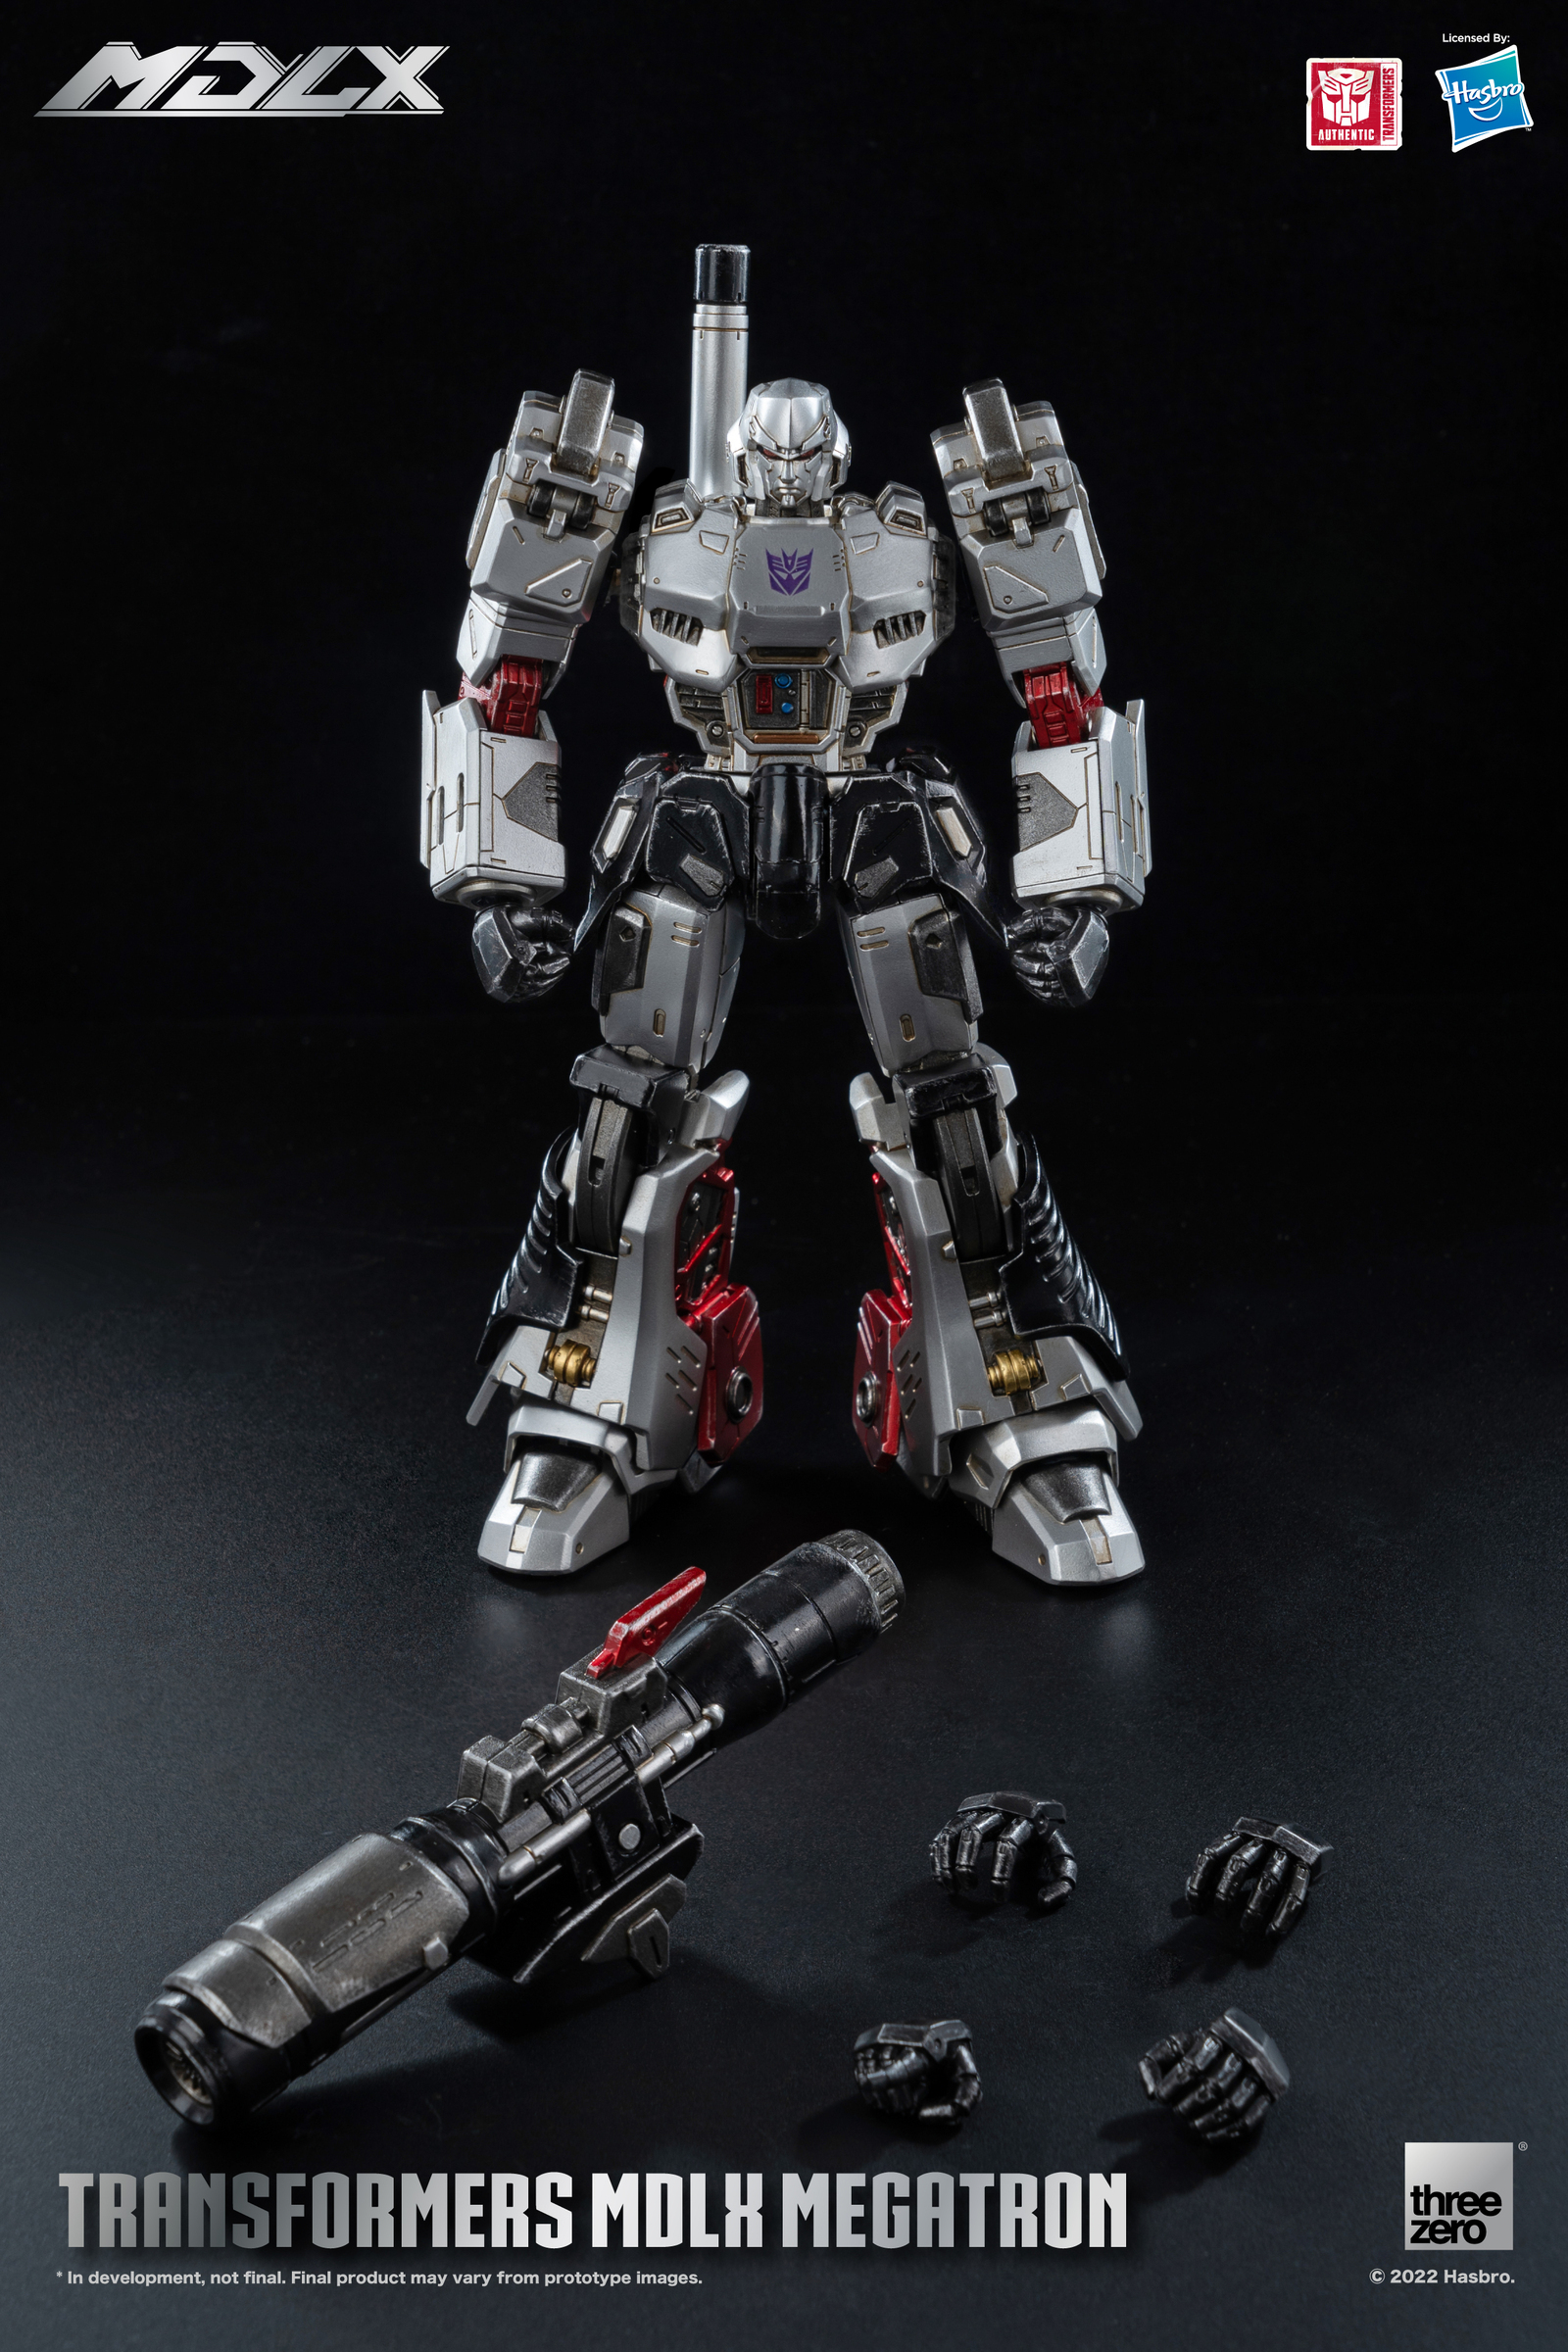  Transformers MDLX Megatron (1)